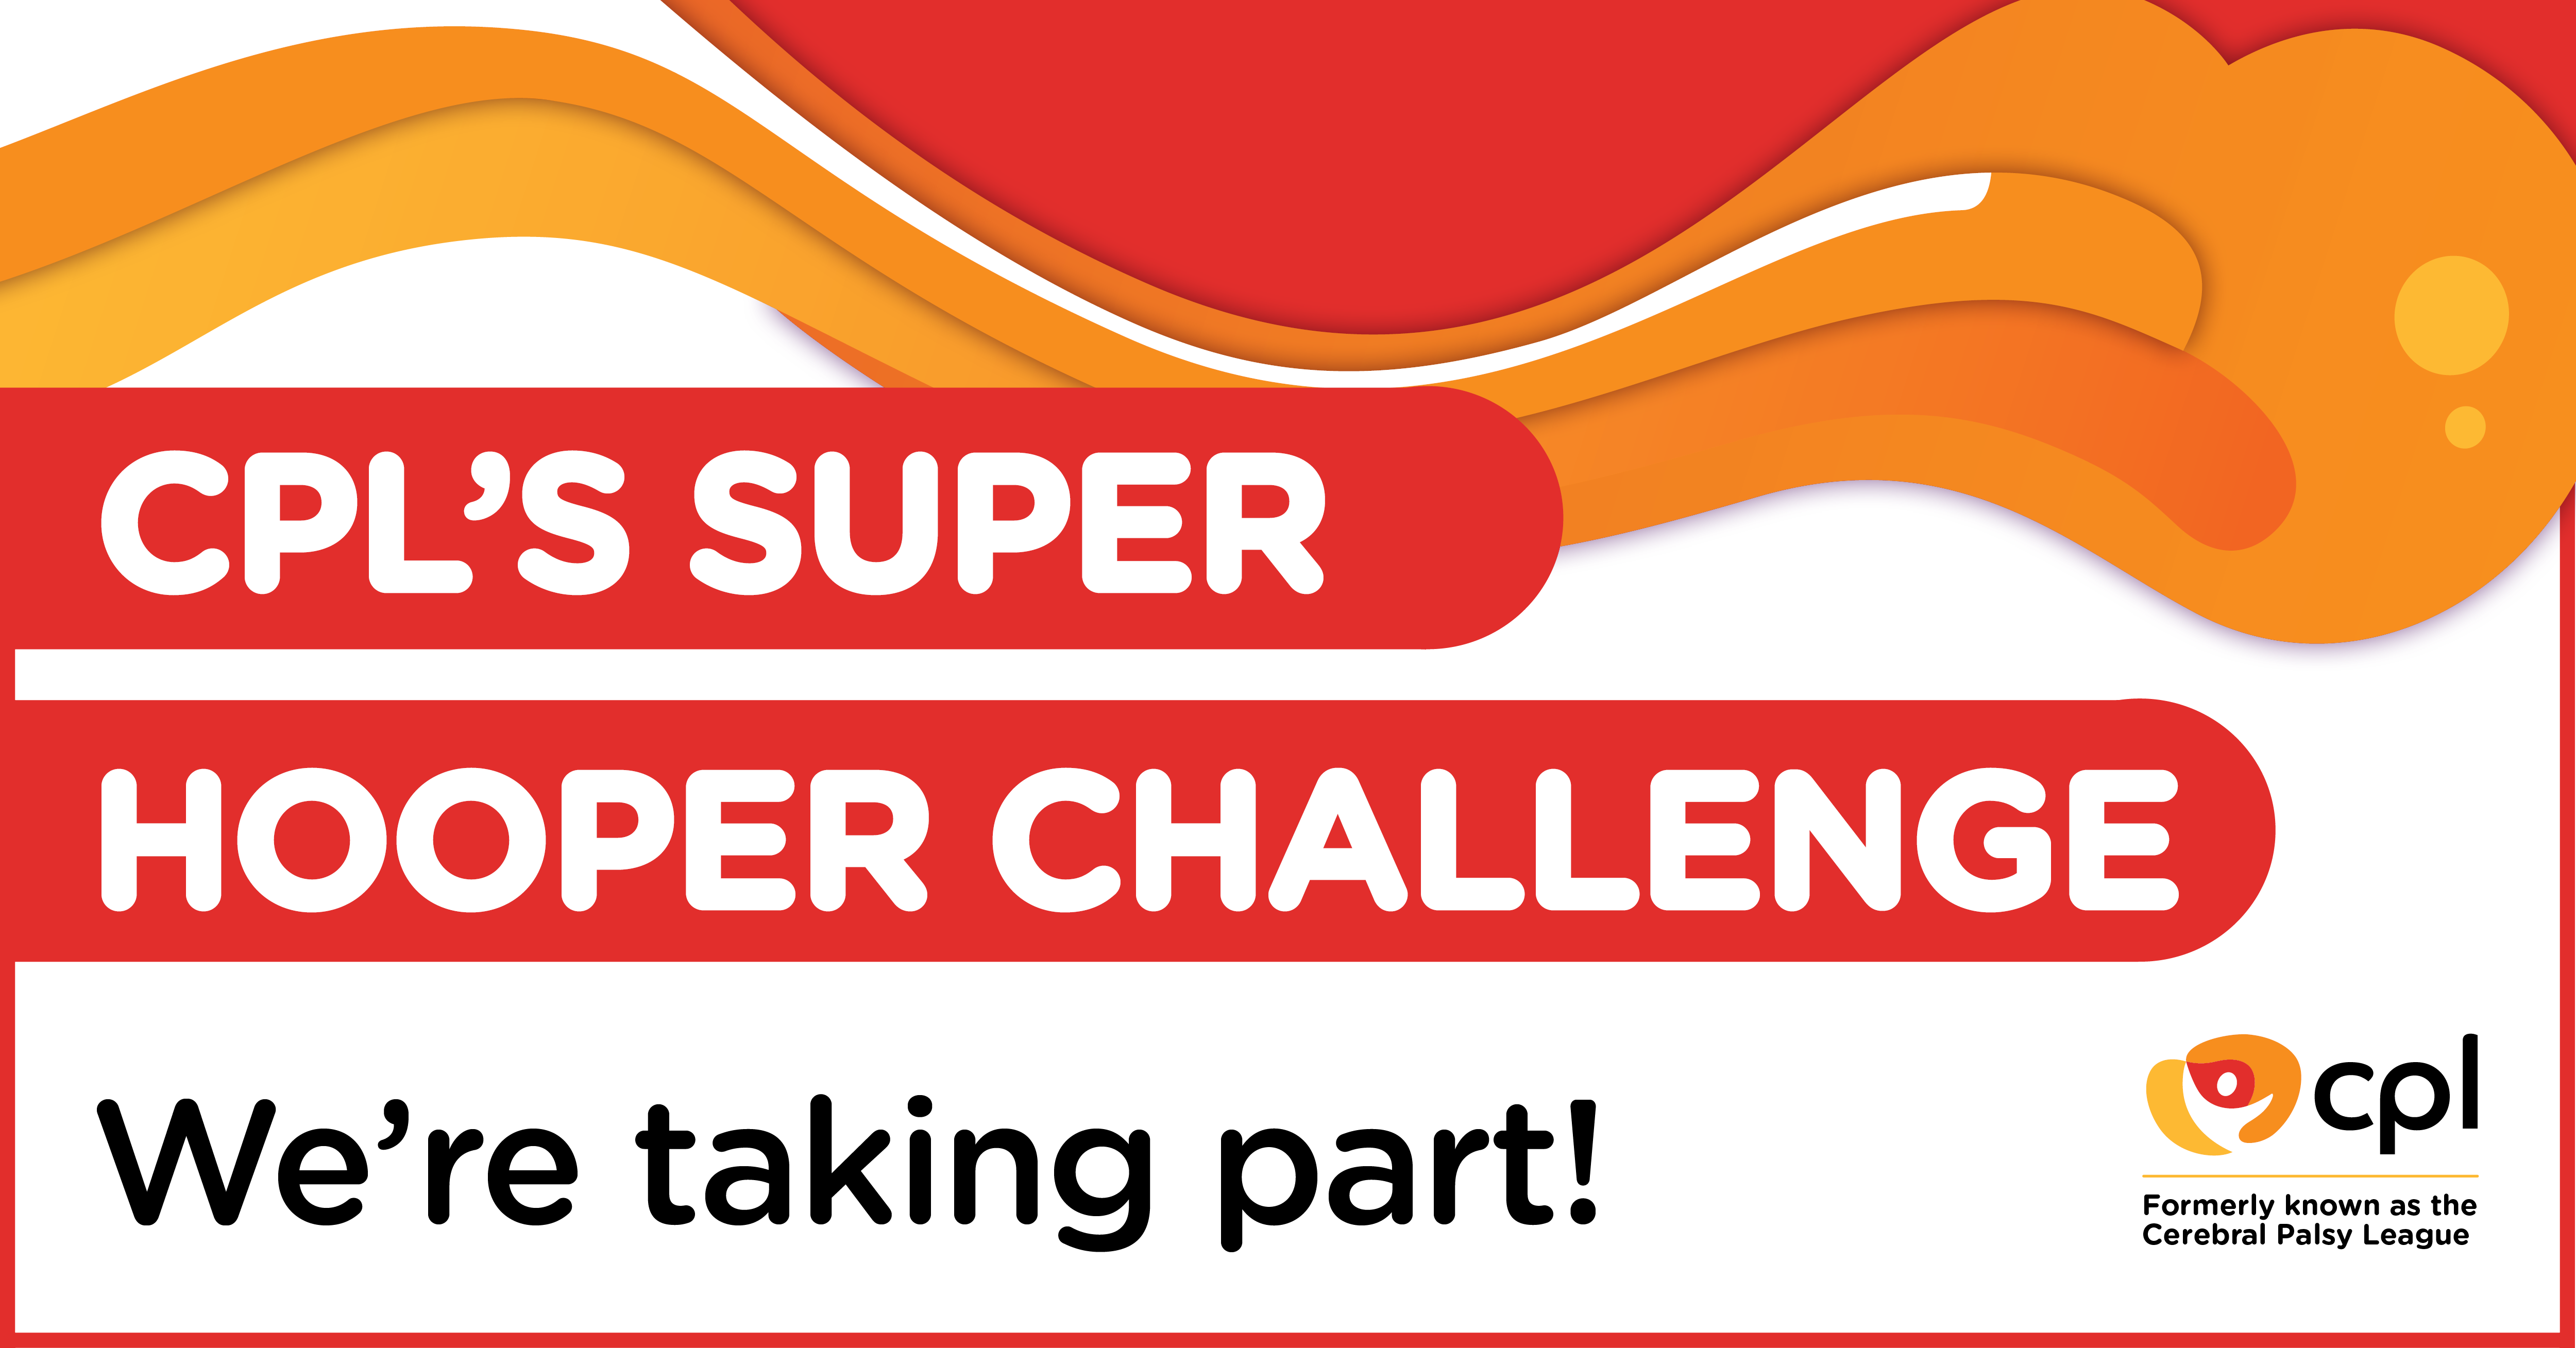 CPL's Super Hooper Challenge - we're taking part